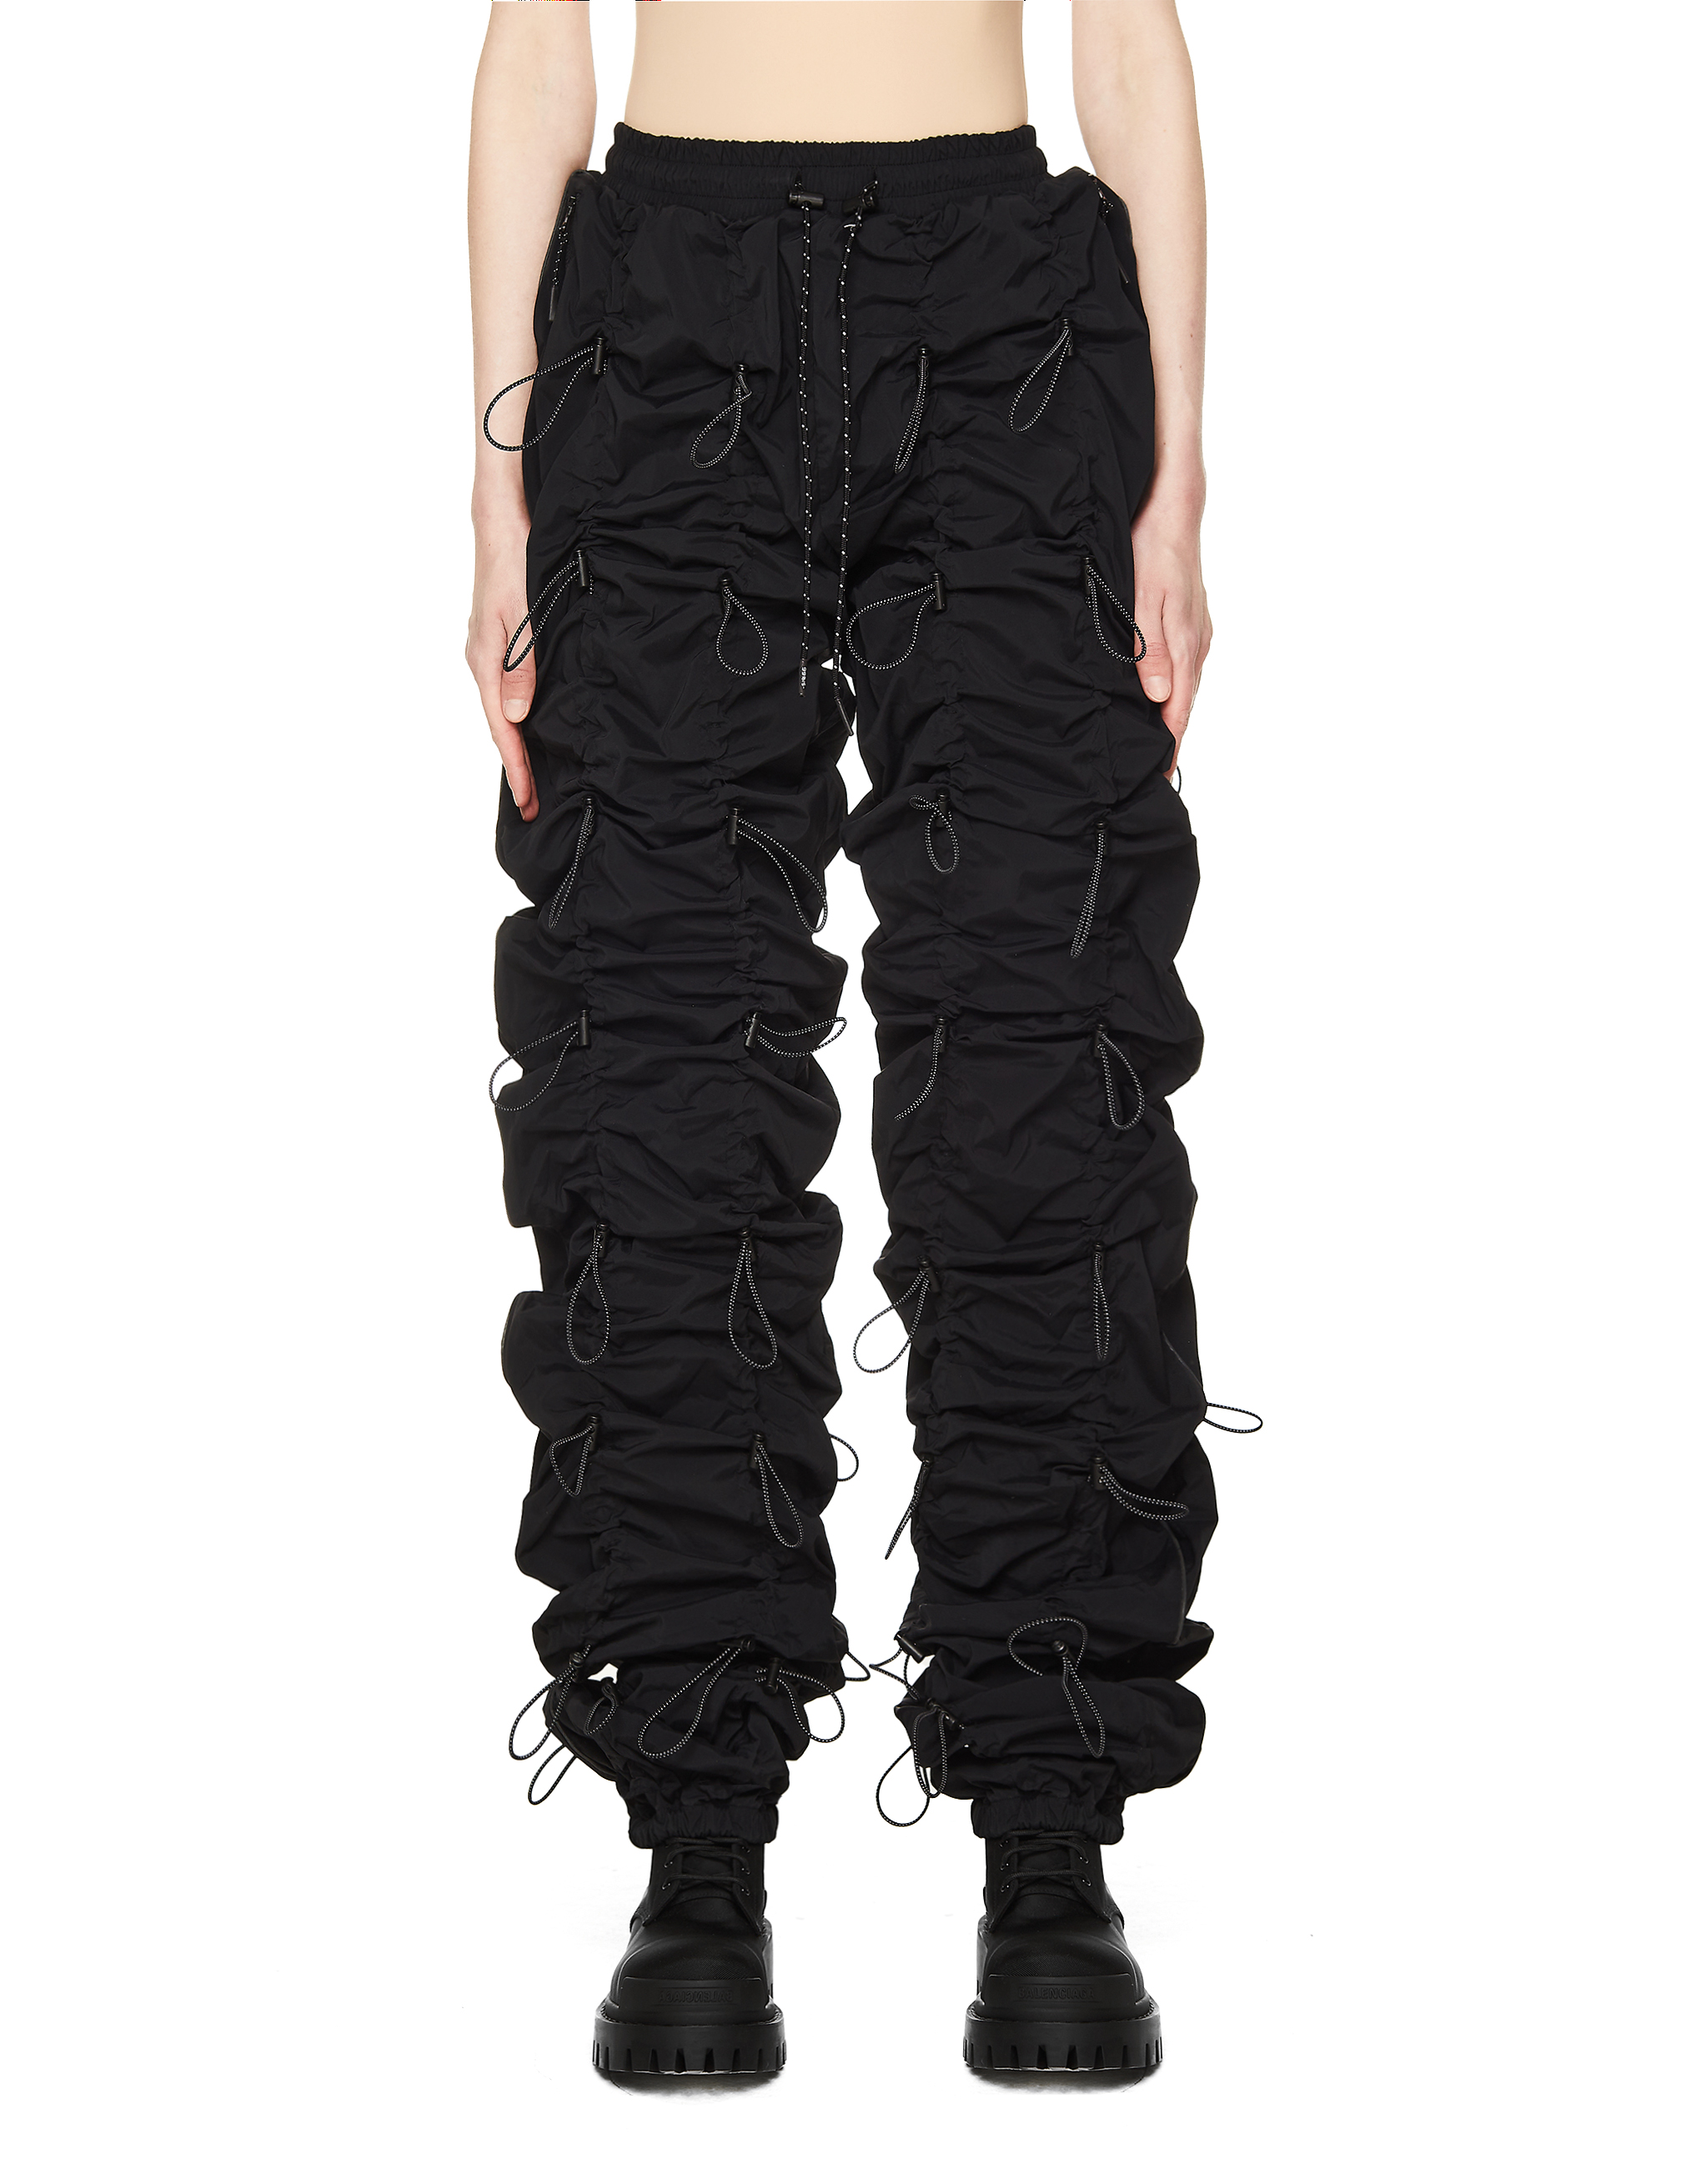 Черные брюки с кулисками 99% IS- NNGOB/PT18, размер 3 NNGOB/PT18 - фото 1